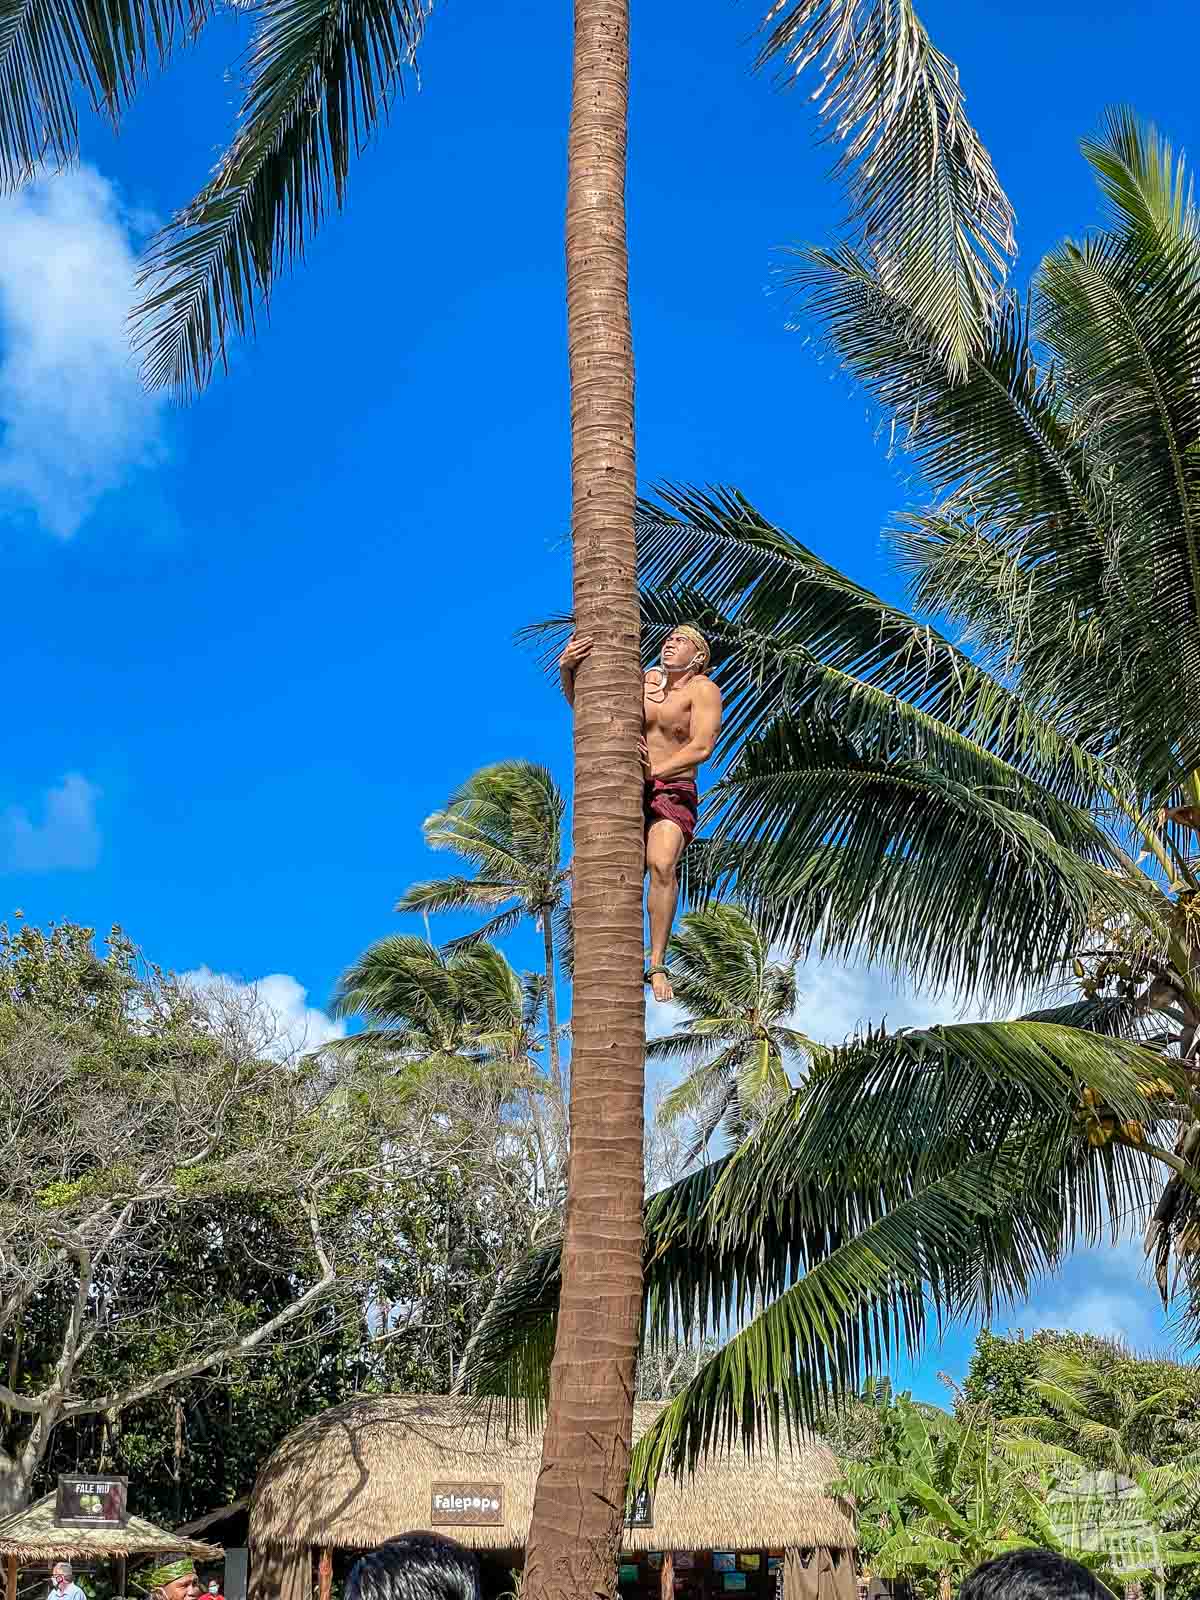 A Samoan performer climbing a coconut tree.